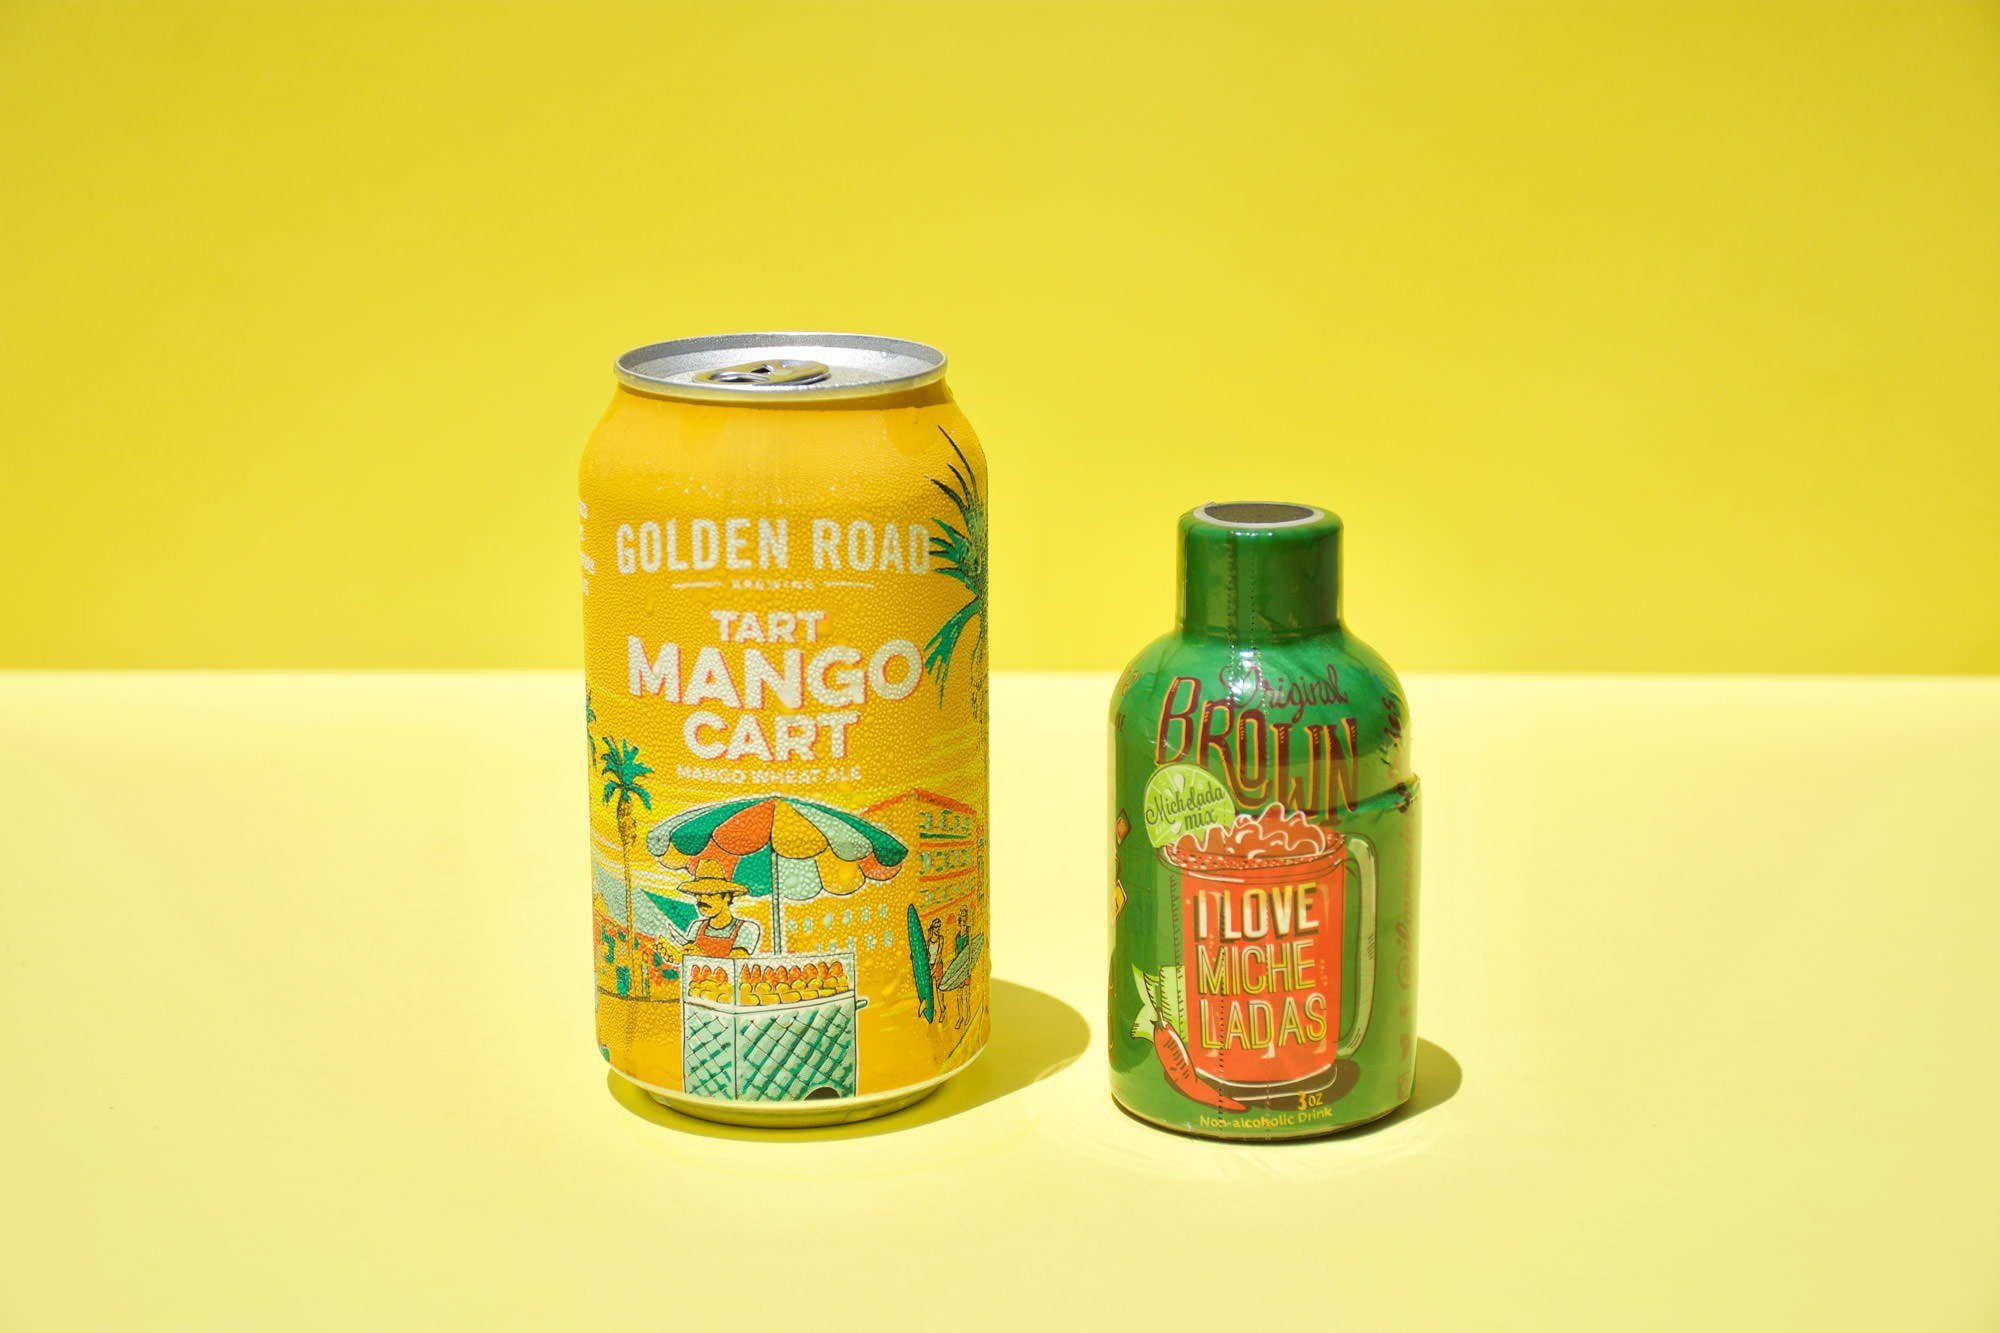 Golden Road's Tart Mango Beer with Ilovemichelada mix